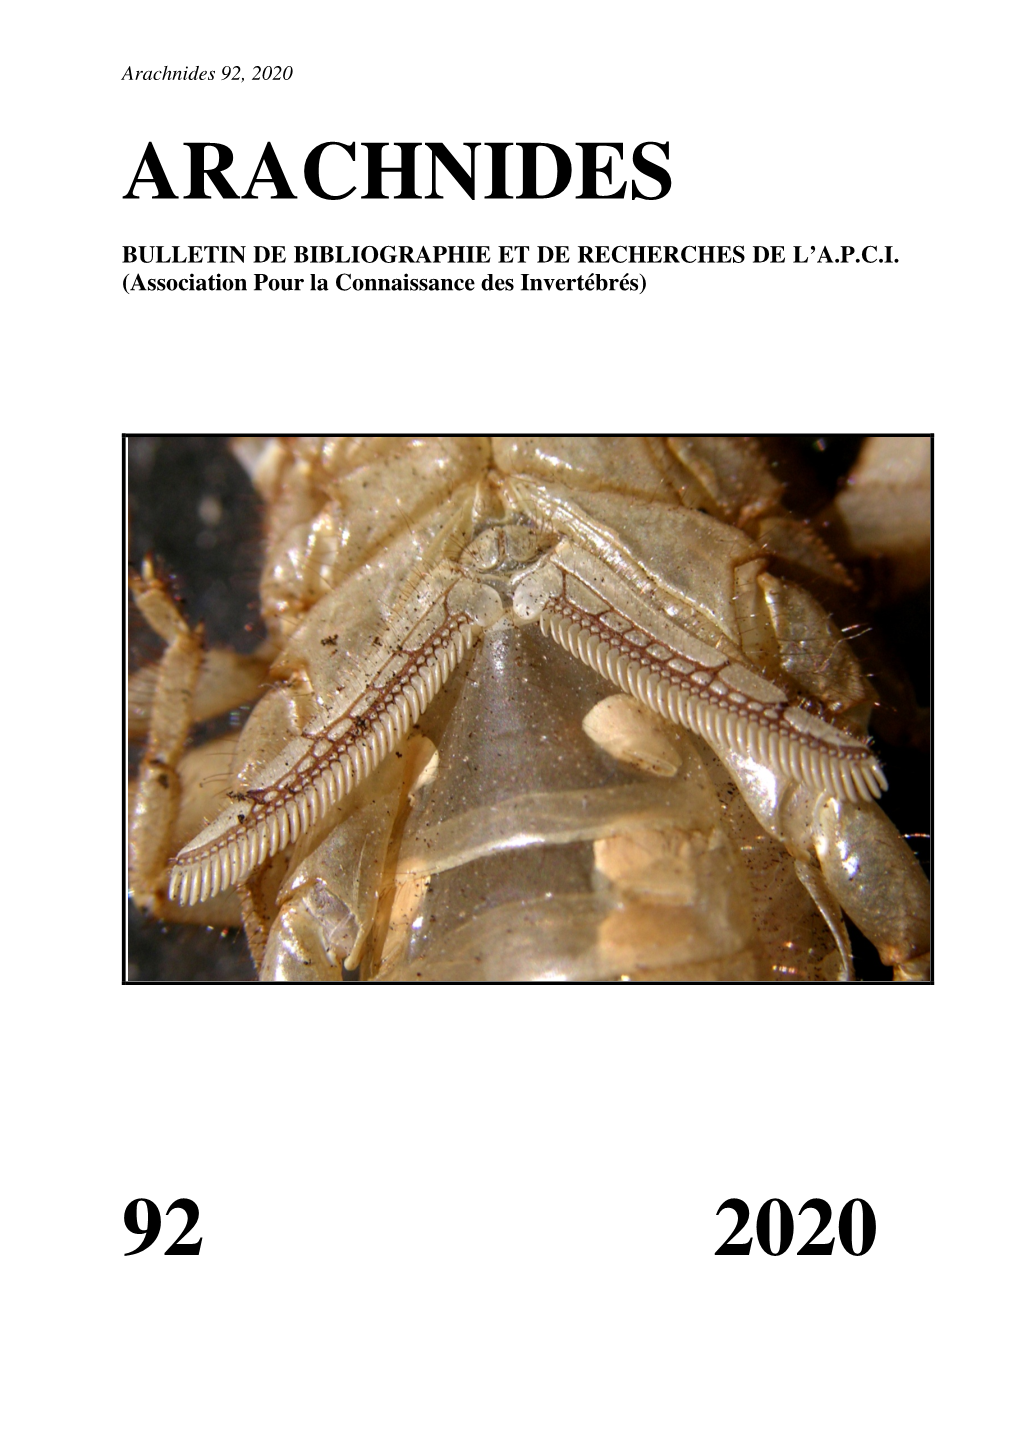 Arachnides 92 2020